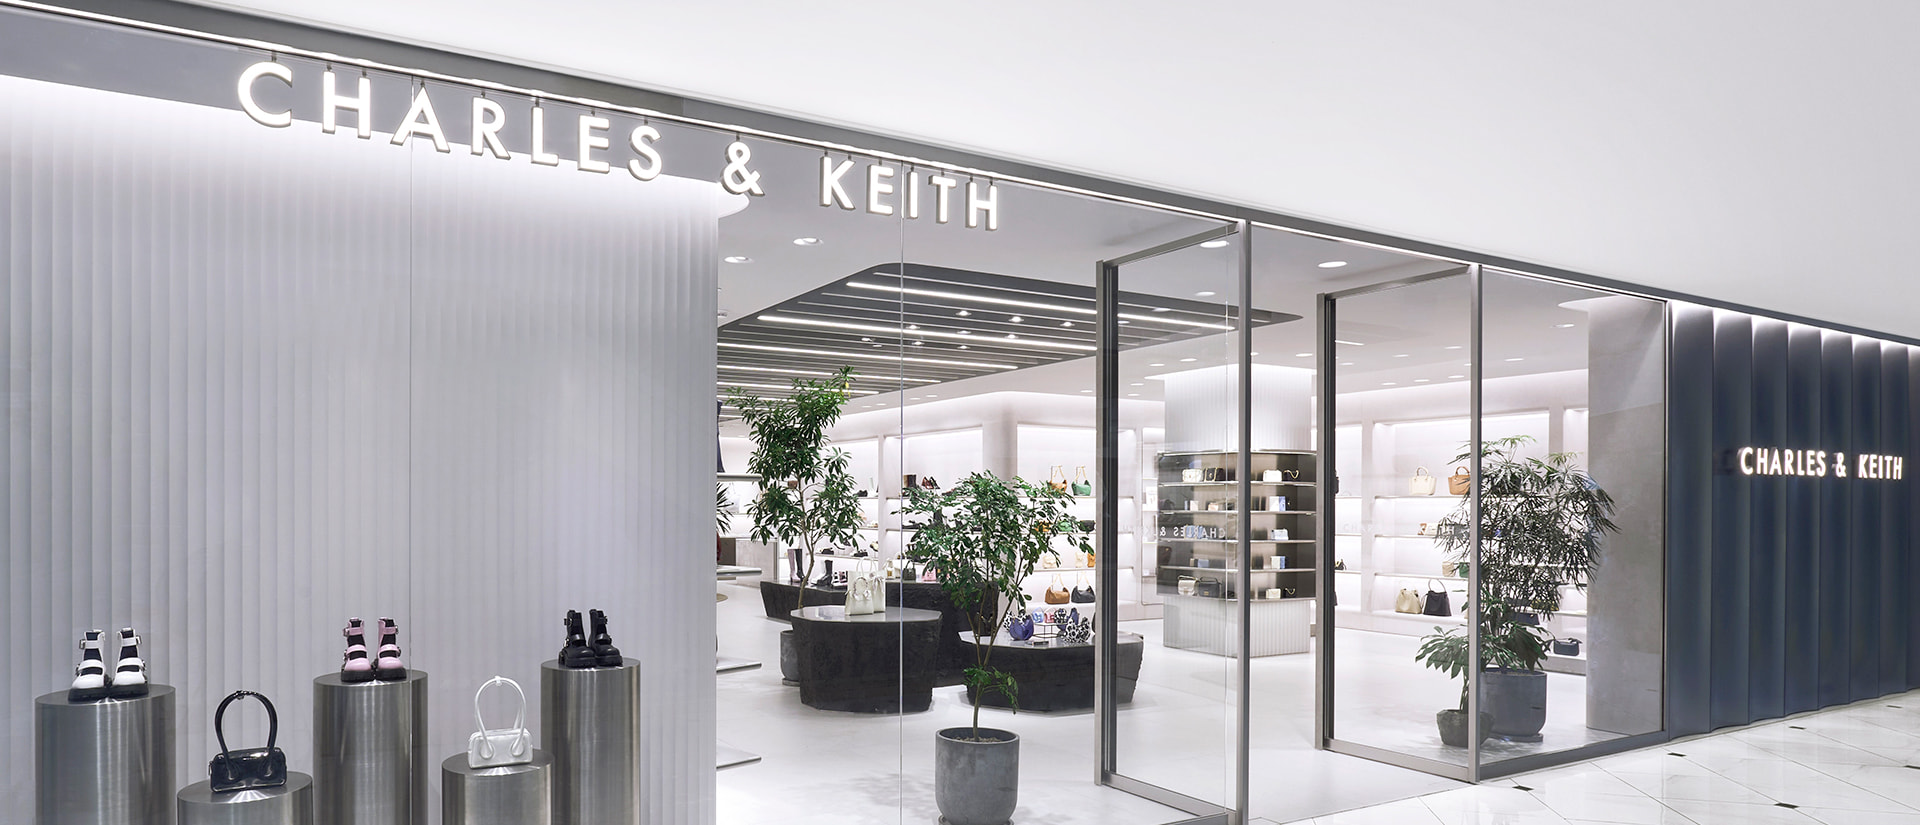 Charles & Keith eyes selling stake - Inside Retail Asia